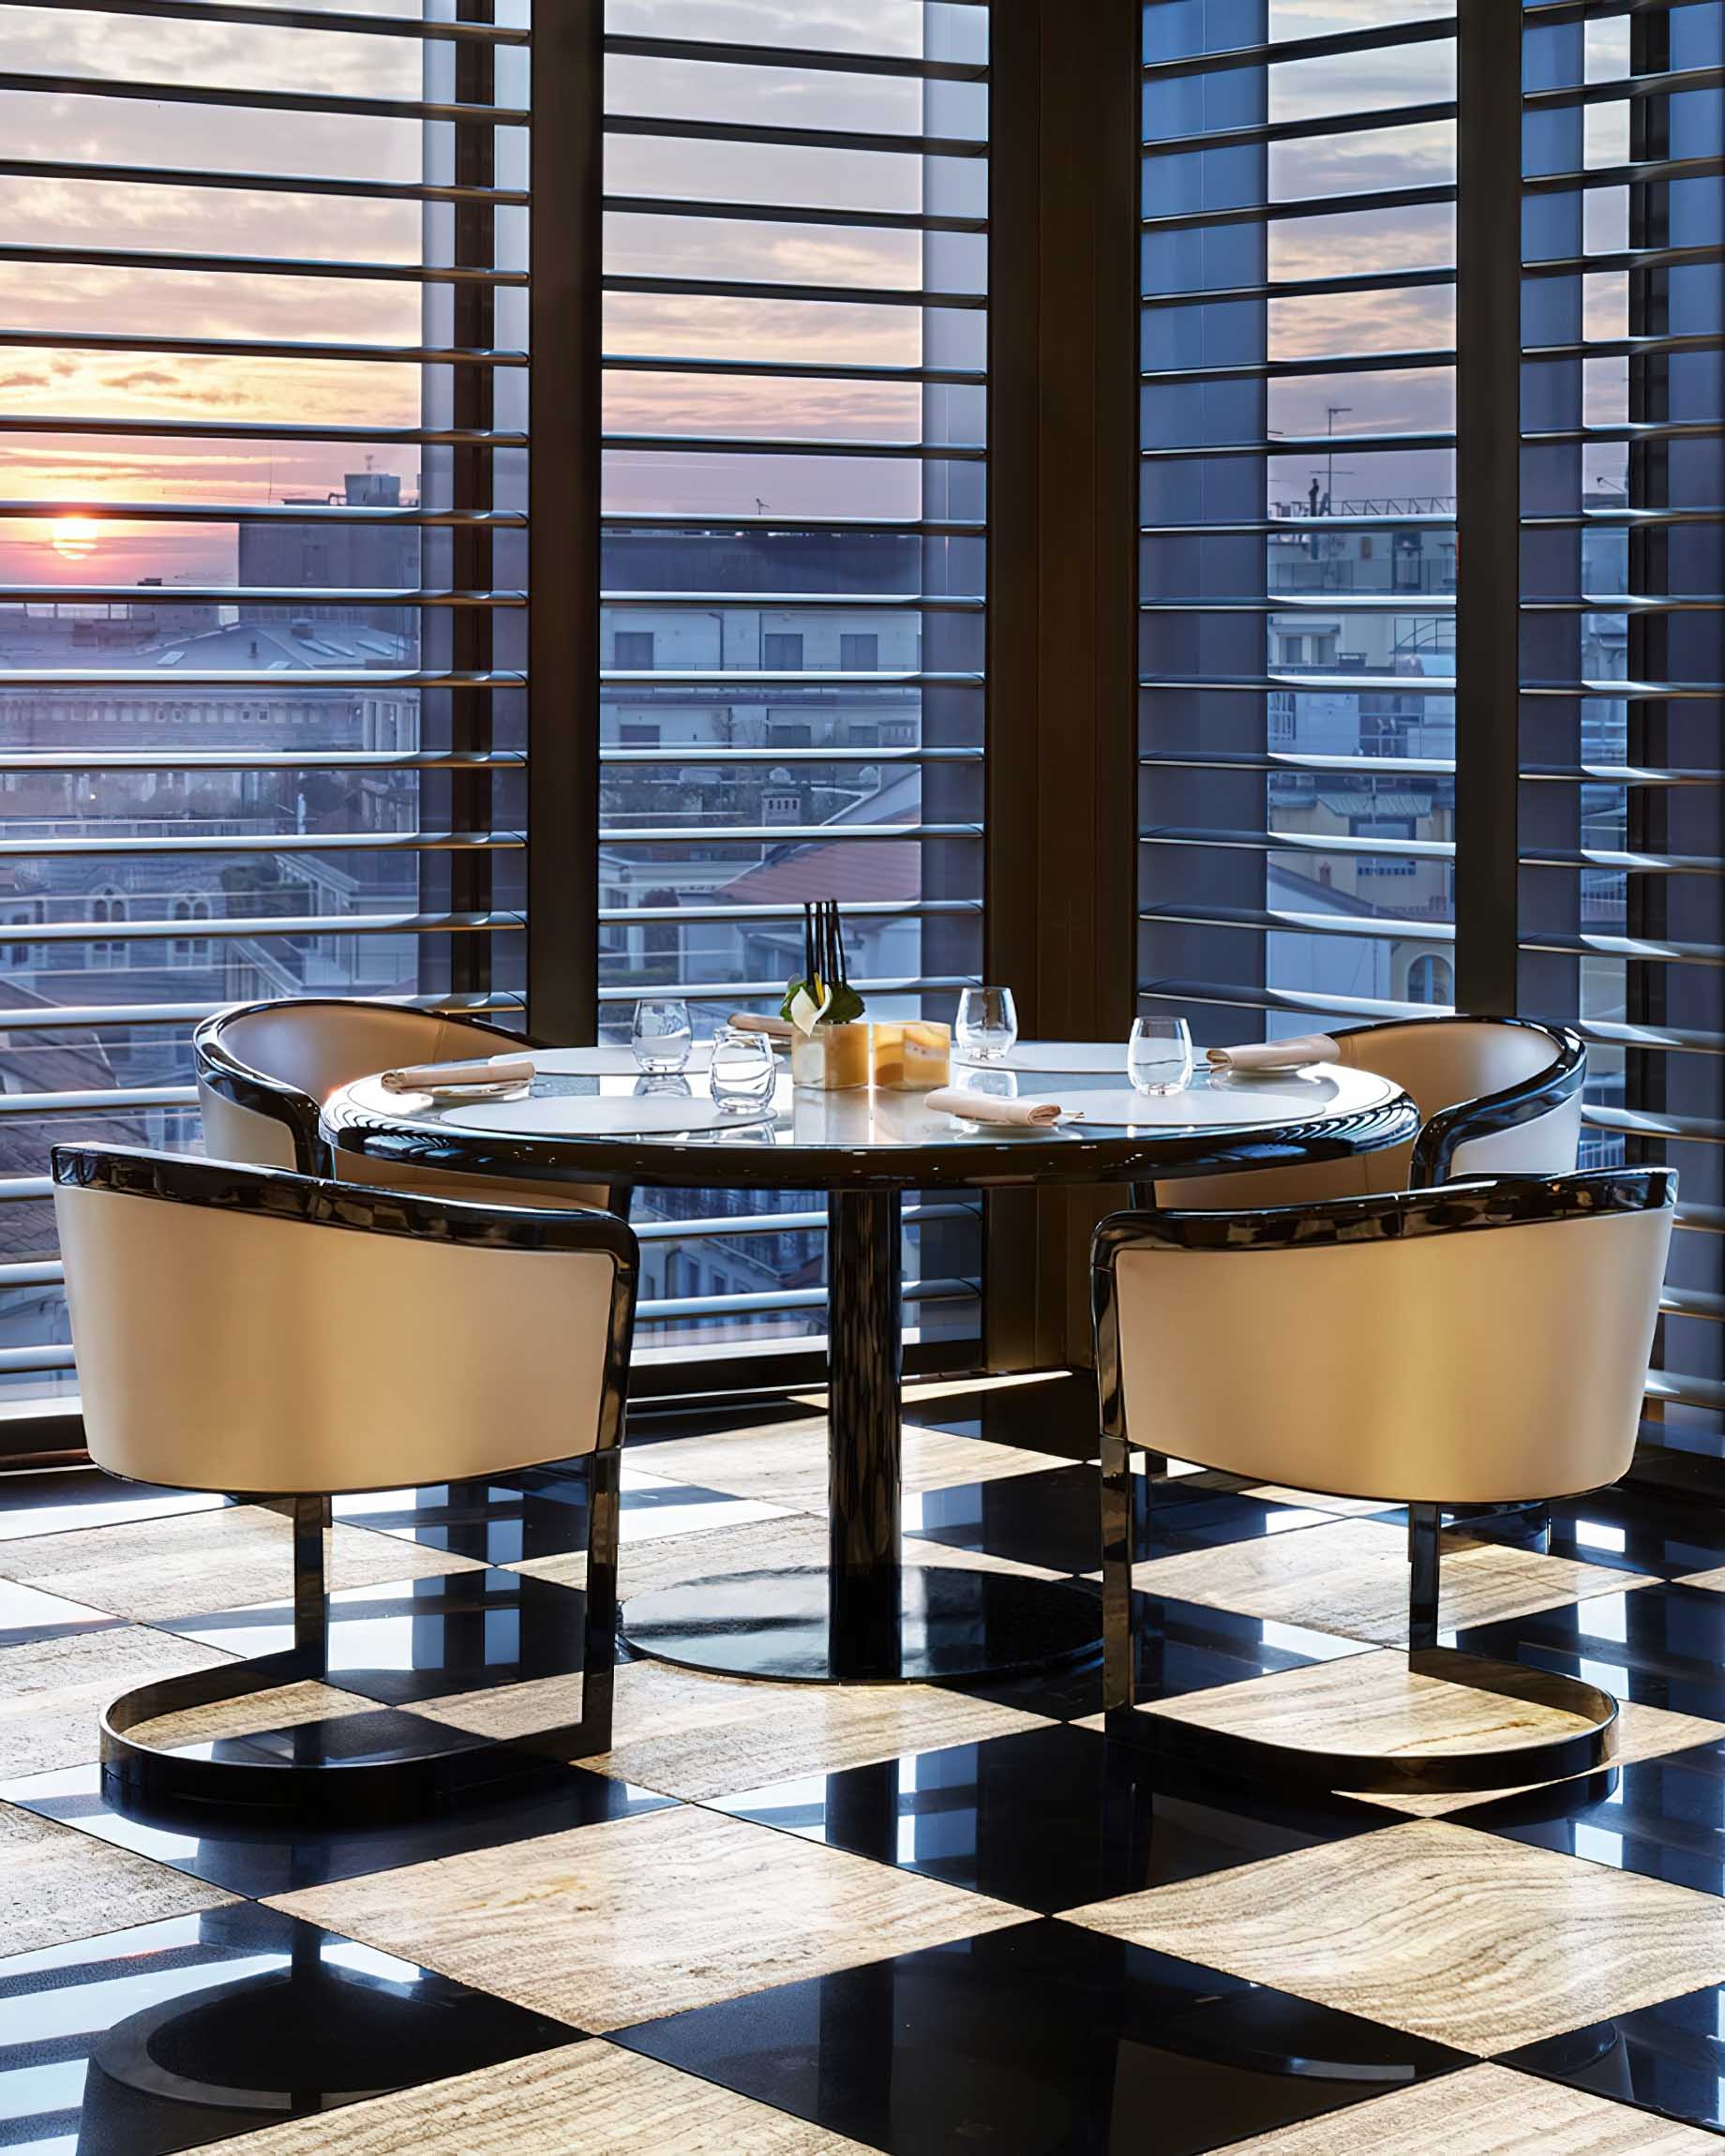 108 – Armani Hotel Milano – Milan, Italy – Armani Restaurant Table